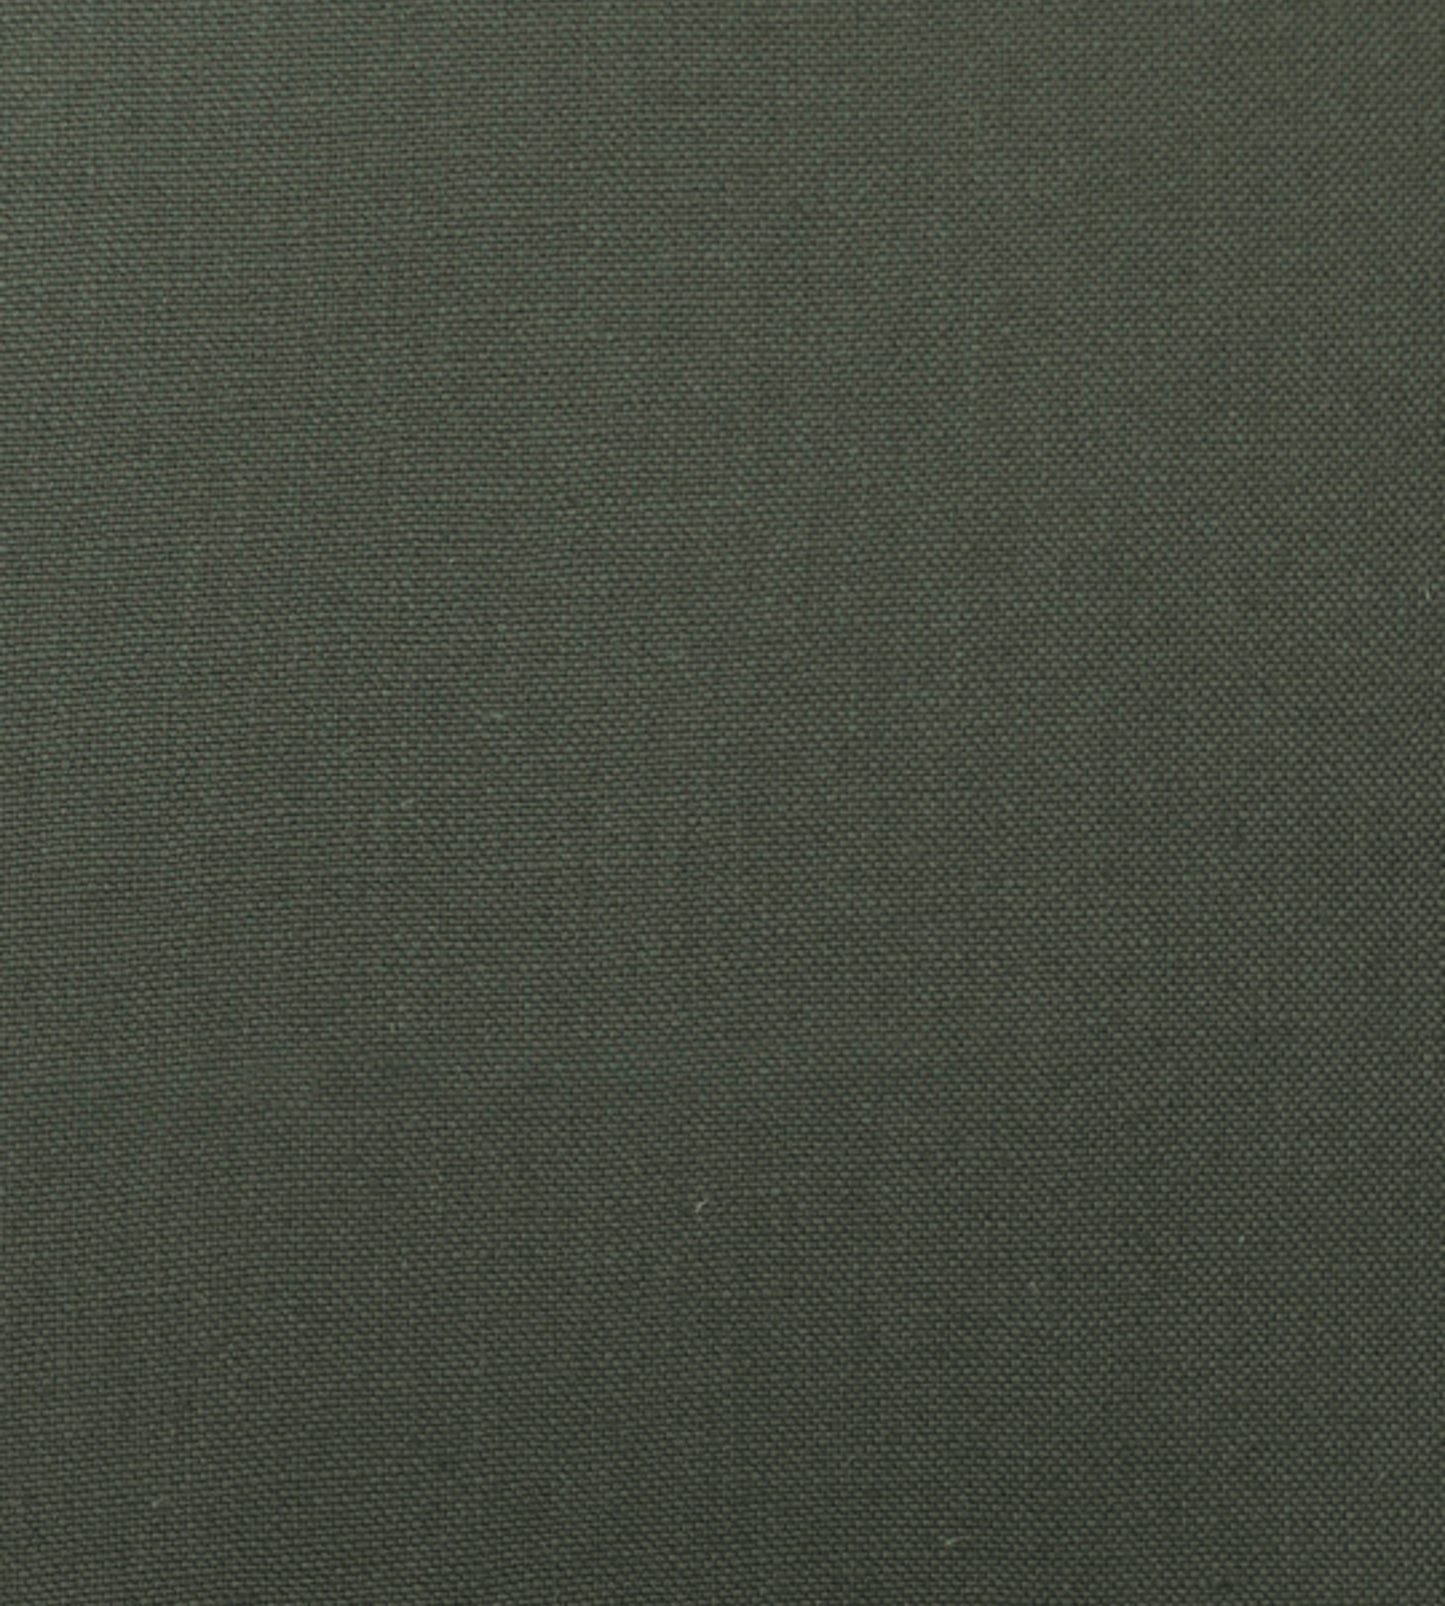 Purchase Scalamandre Fabric Product# SC 005427108, Toscana Linen Smoke 1